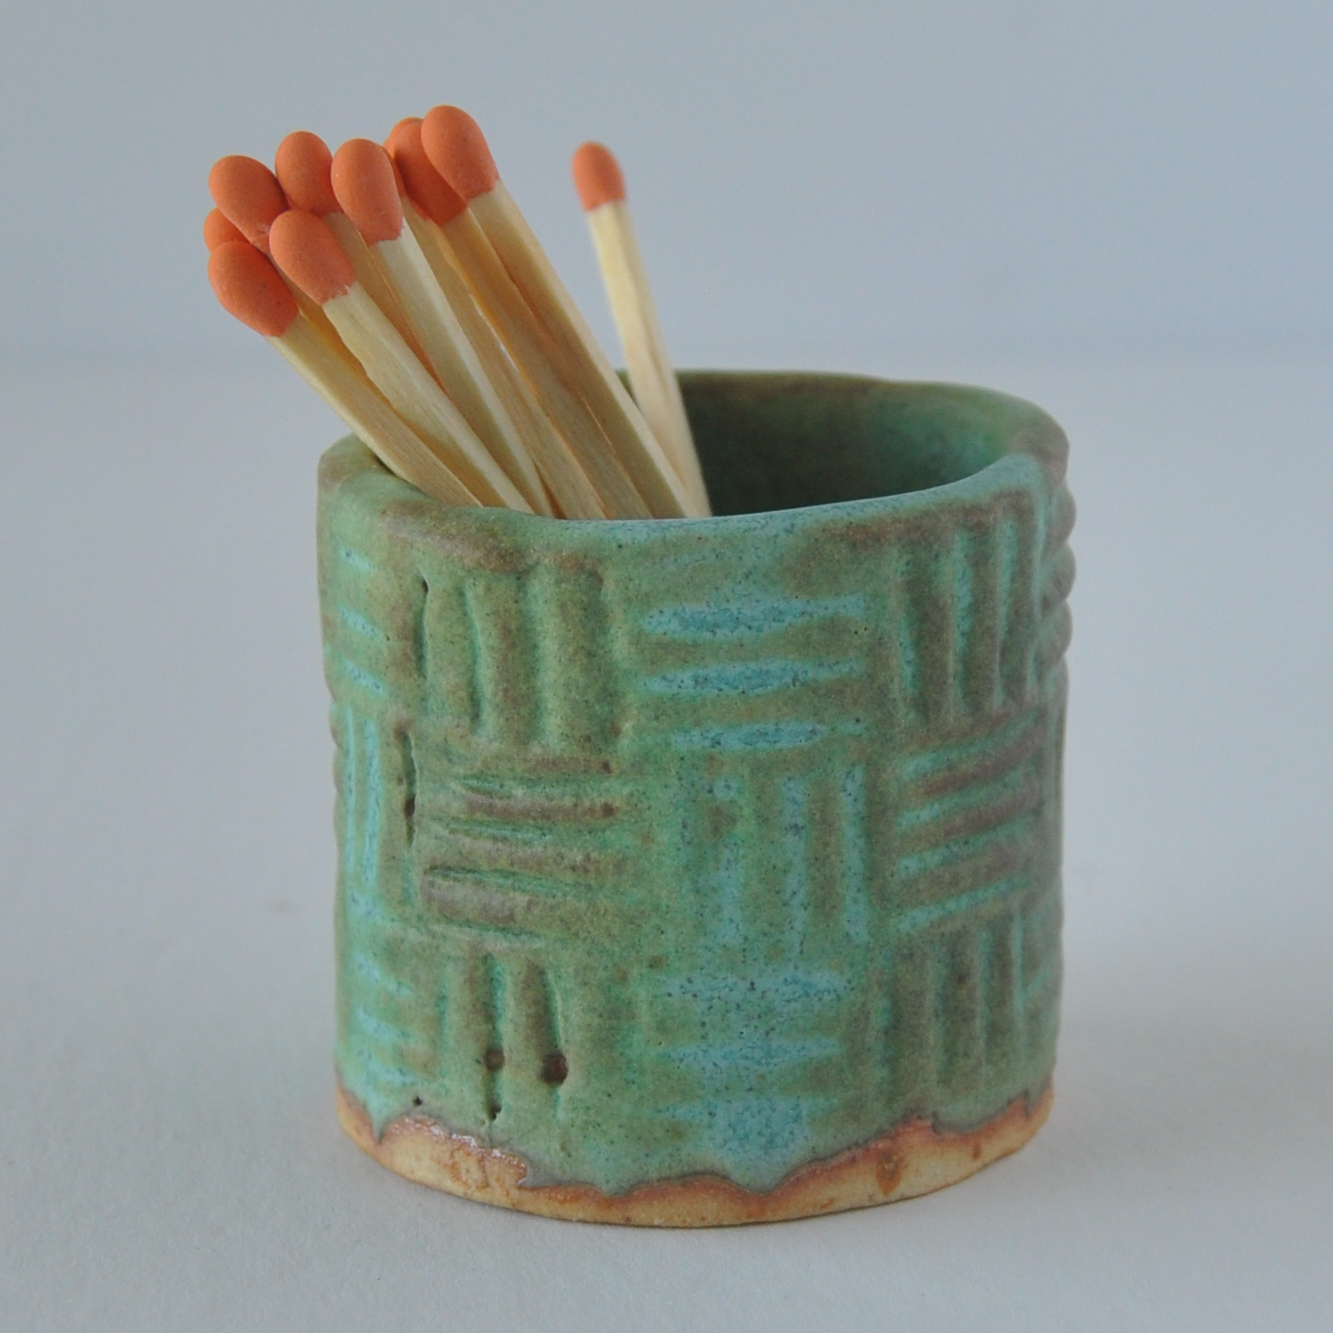 Turquoise patterned ceramic match striker